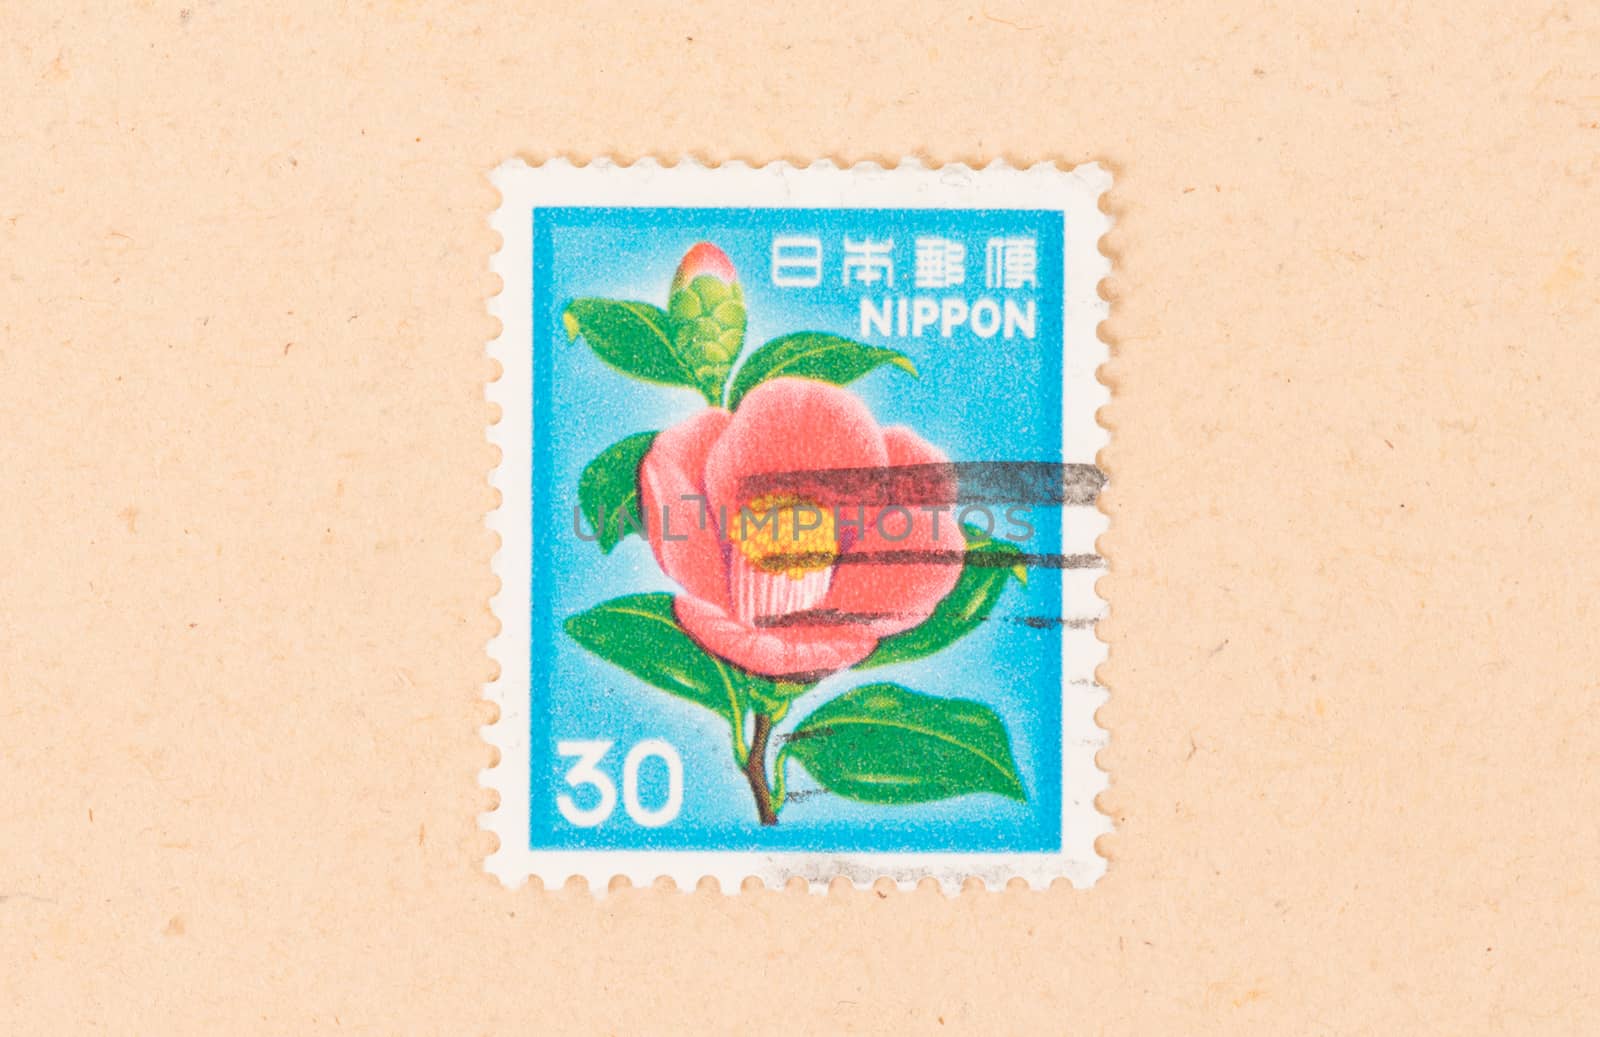 JAPAN - CIRCA 1980: A stamp printed in Japan shows a flower, circa 1980